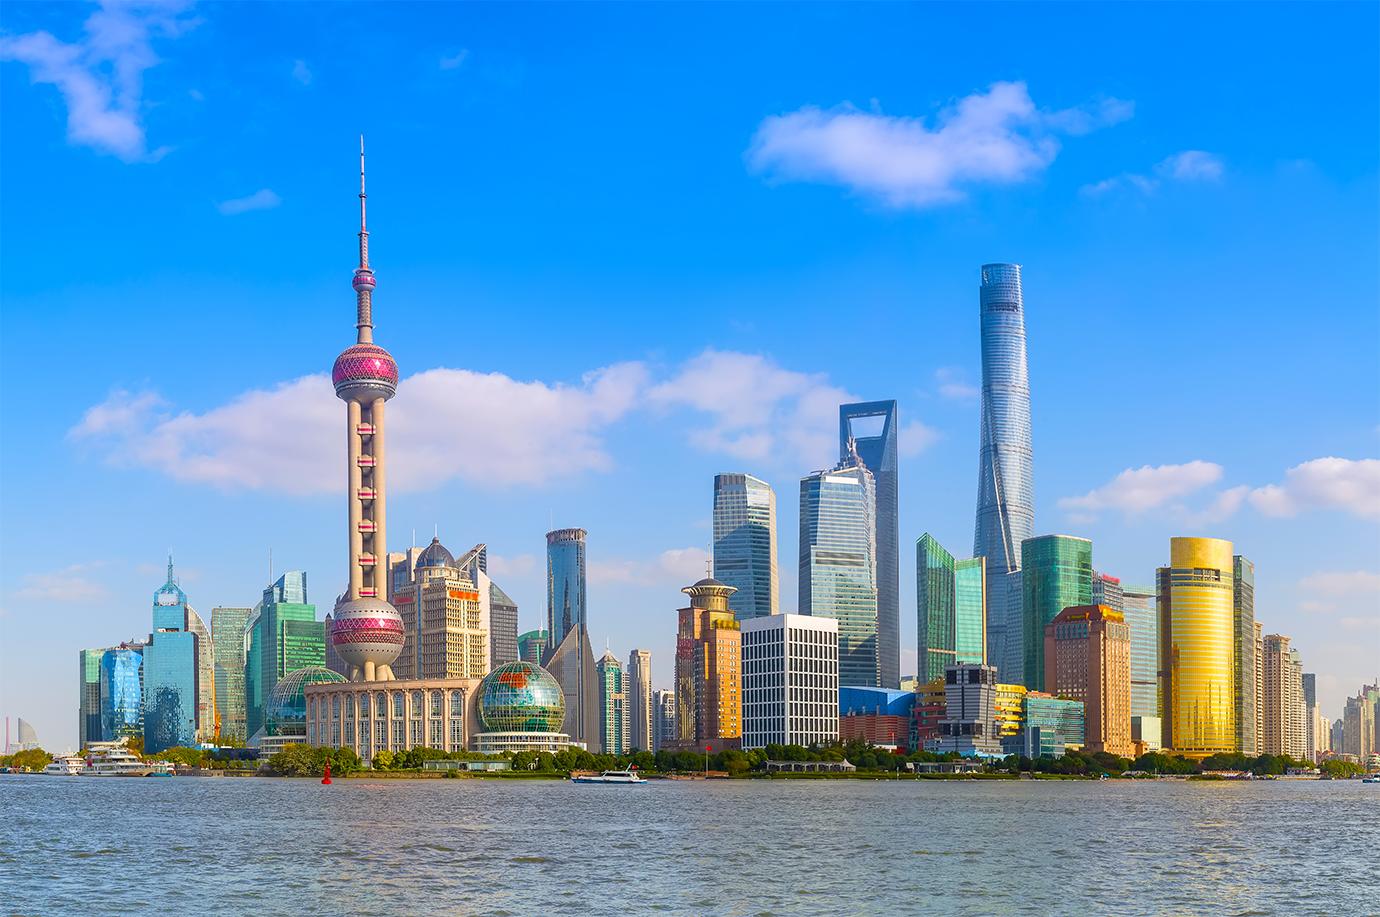 Views of Shanghai skyline